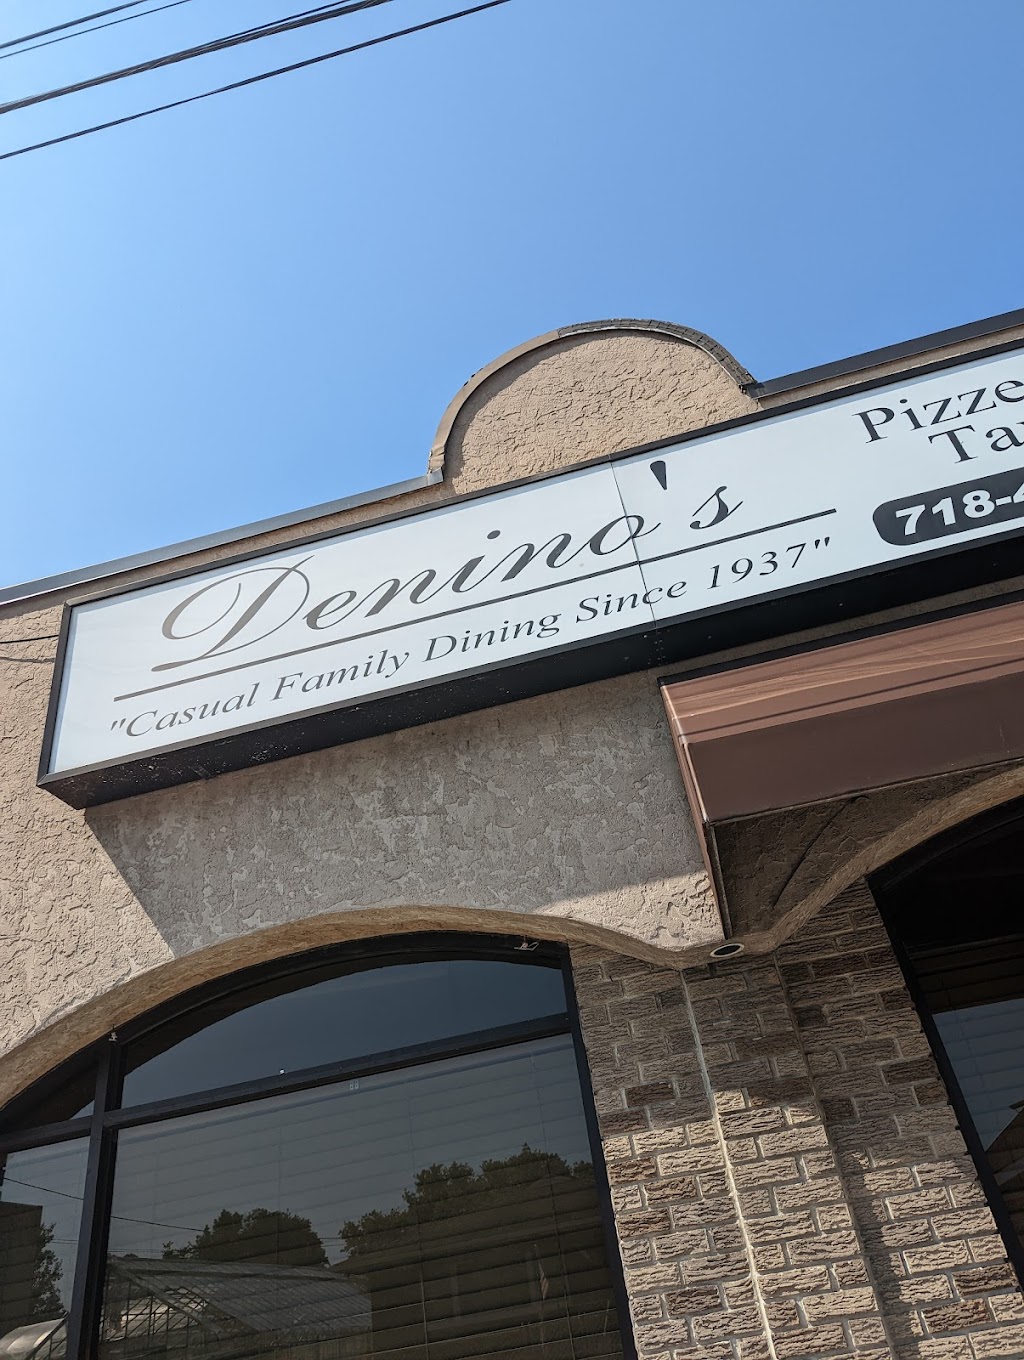 Denino’s Pizzeria & Tavern | 524 Port Richmond Ave, Staten Island, NY 10302 | Phone: (718) 442-9401